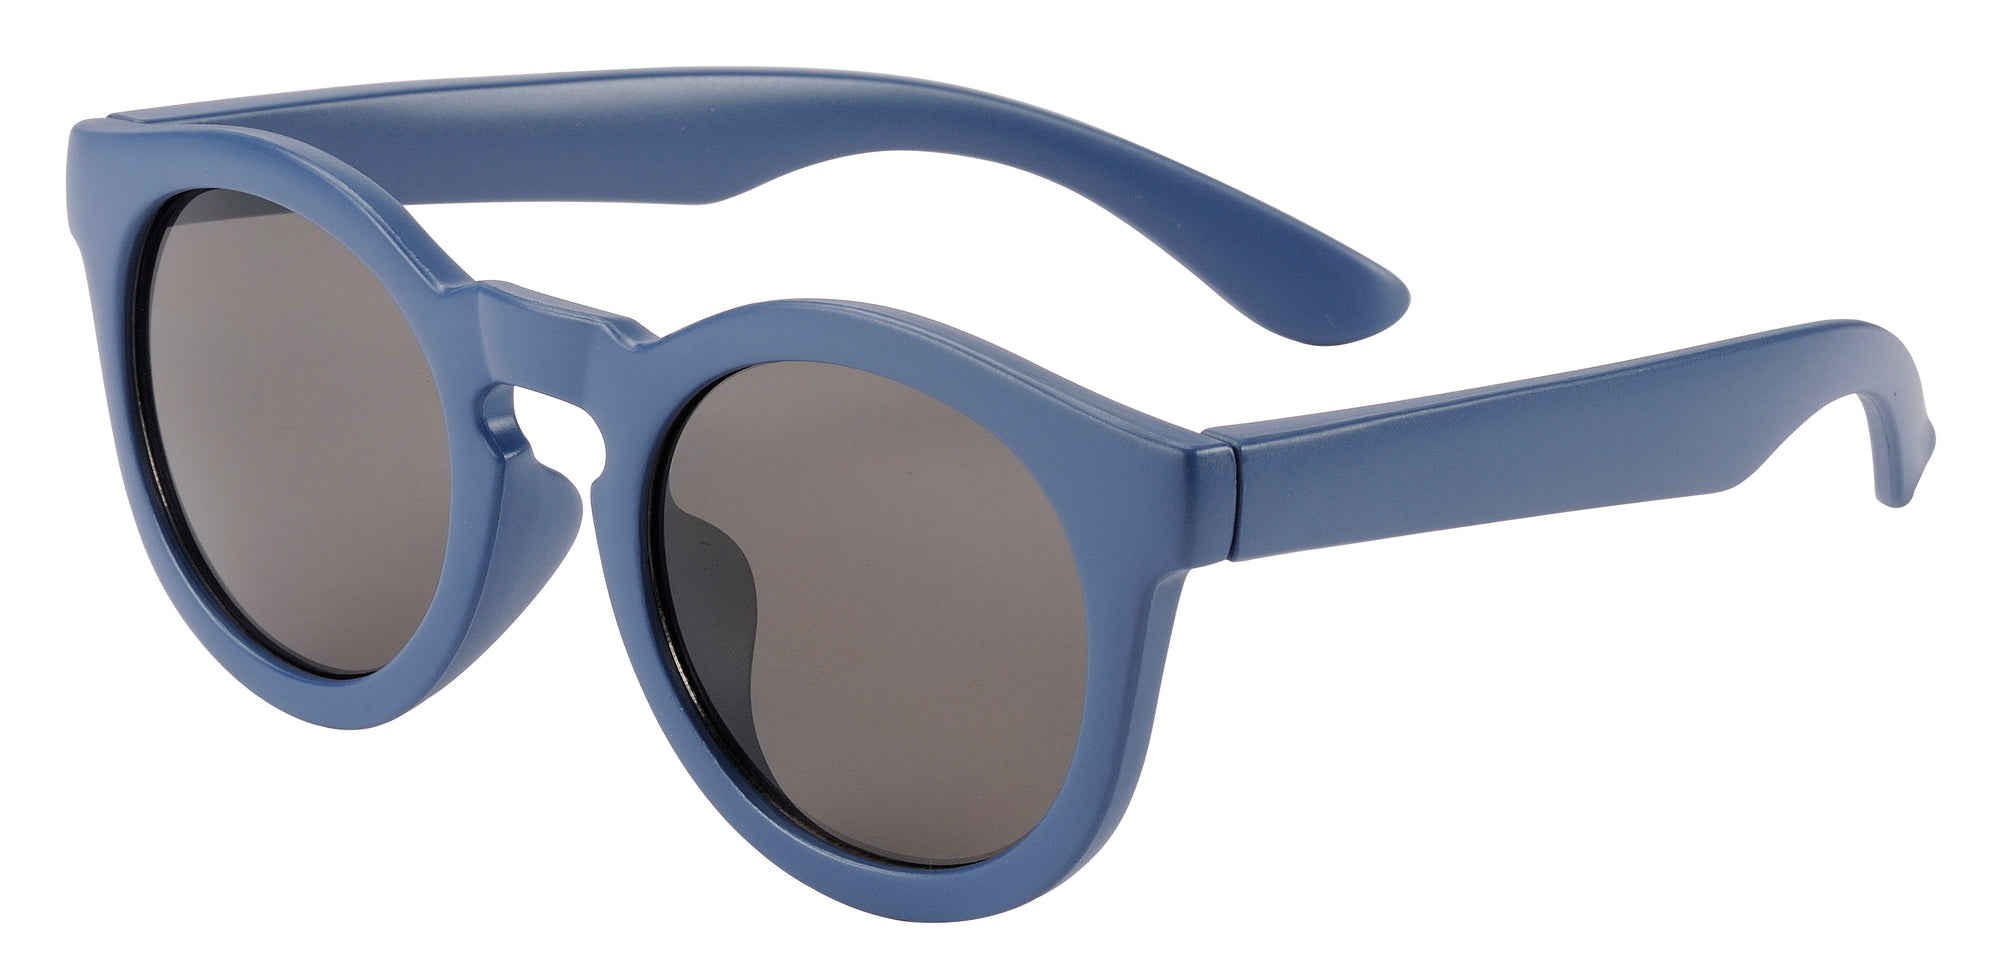 Kids Eco Sunglasses - Ocean Blue